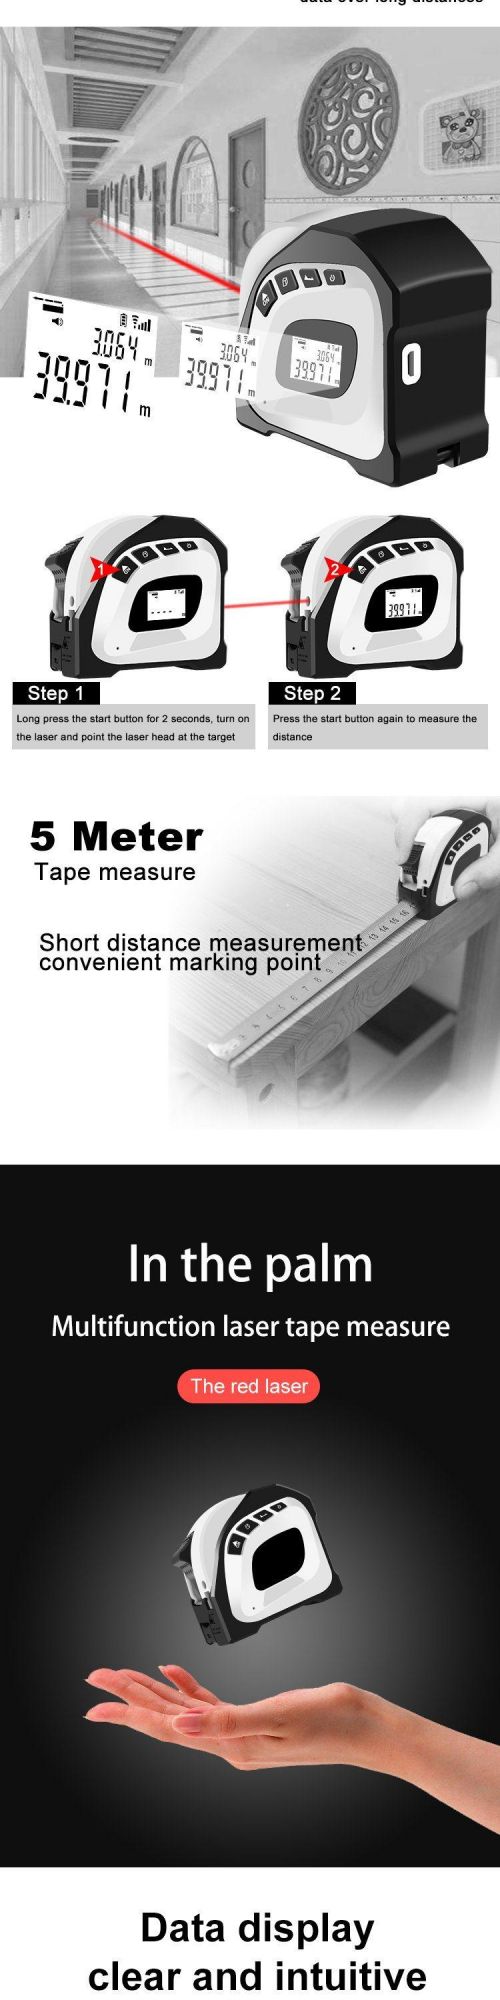 40m Tape Measure Laser Measurement High Precision